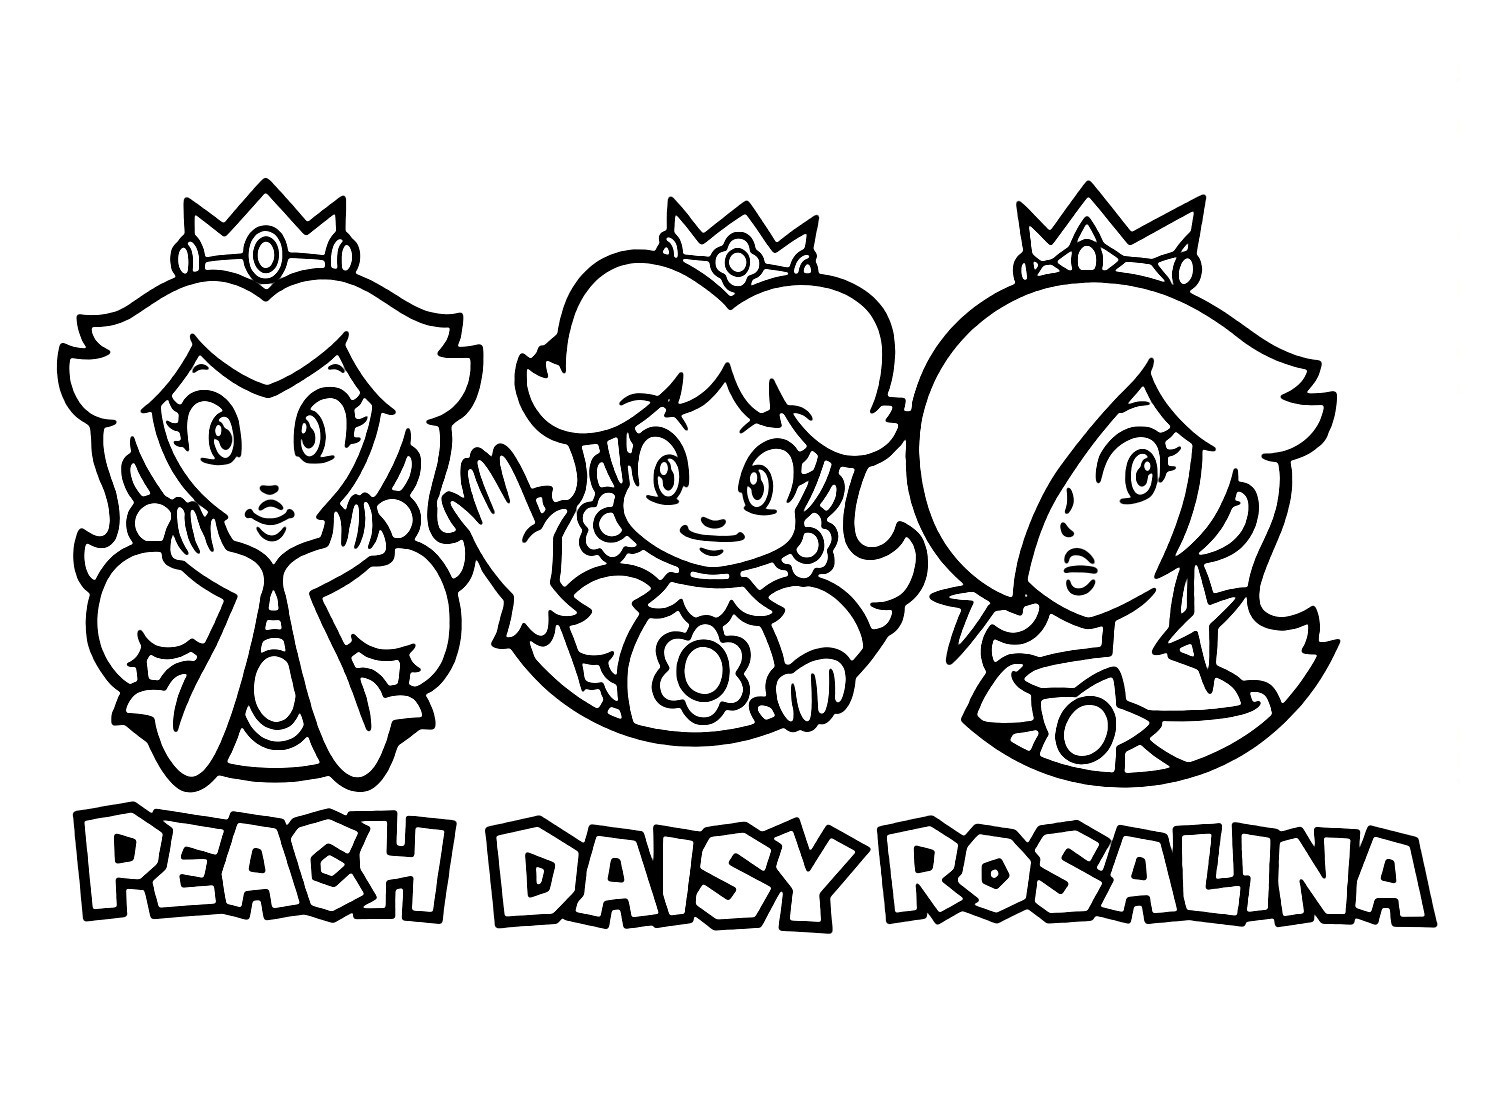 Princesa Peach, Daisy, Rosalina de Princesa Daisy